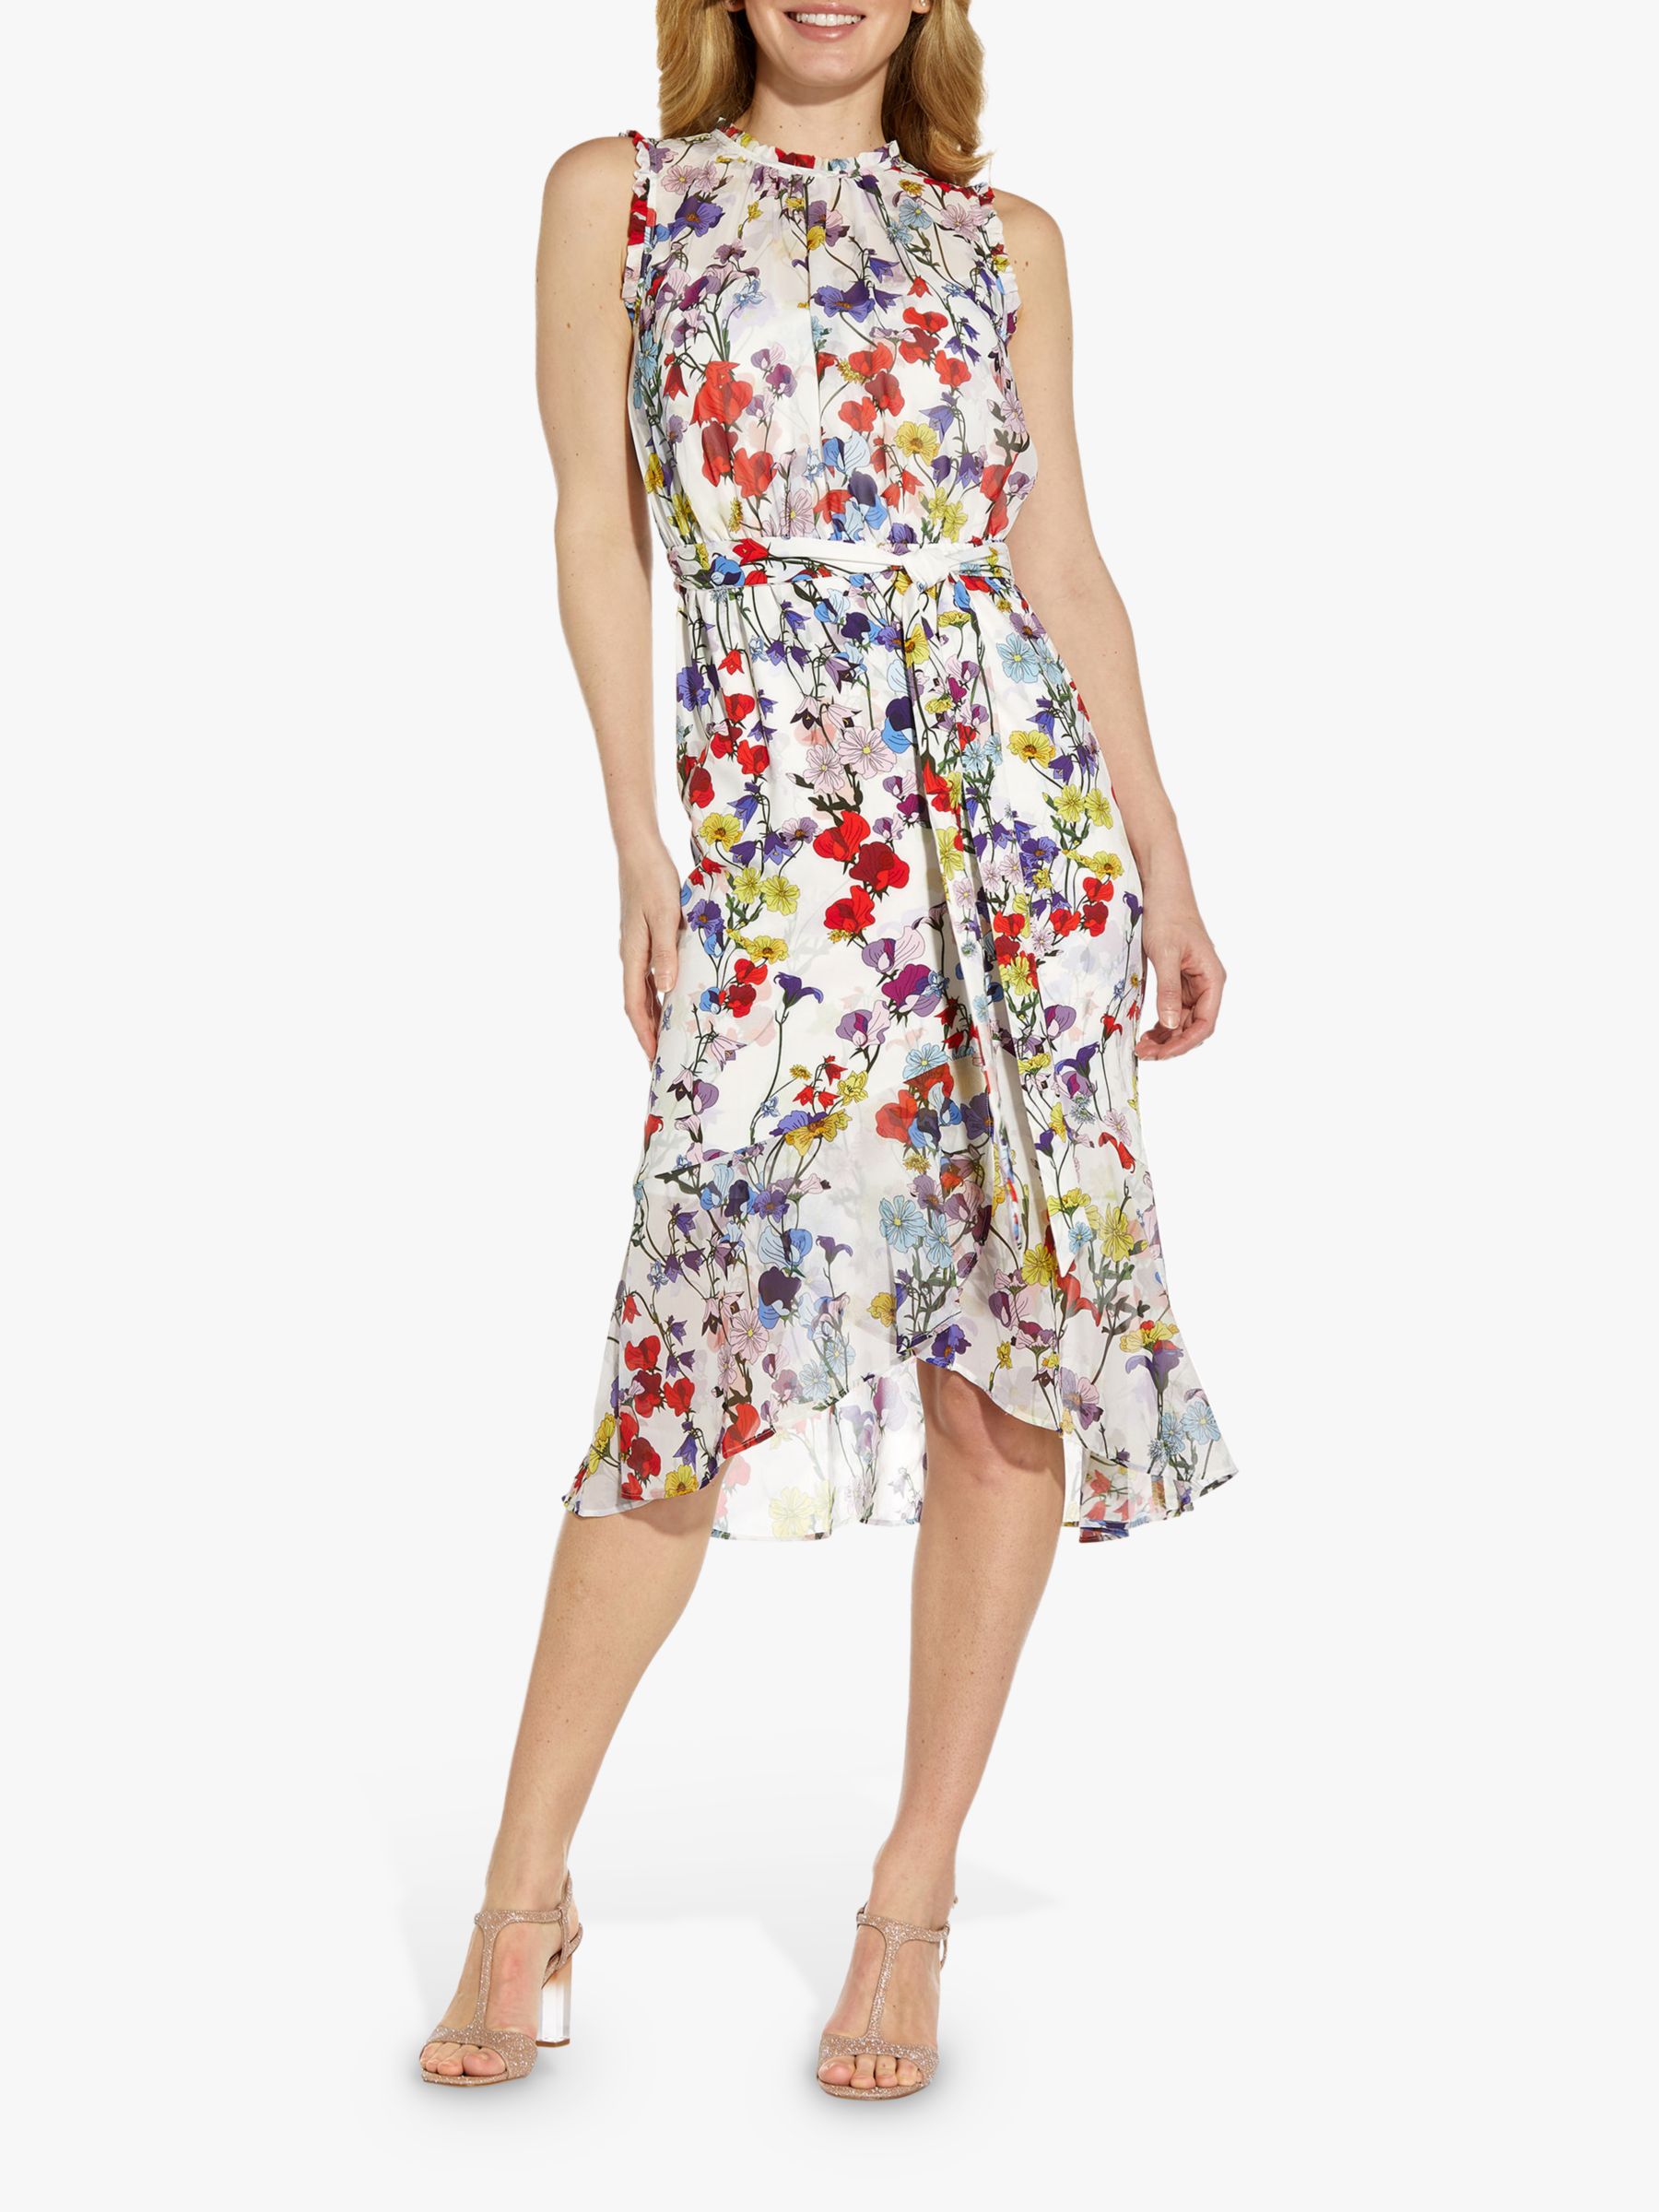 Adrianna Papell Floral Print Flounce Dress, Multi